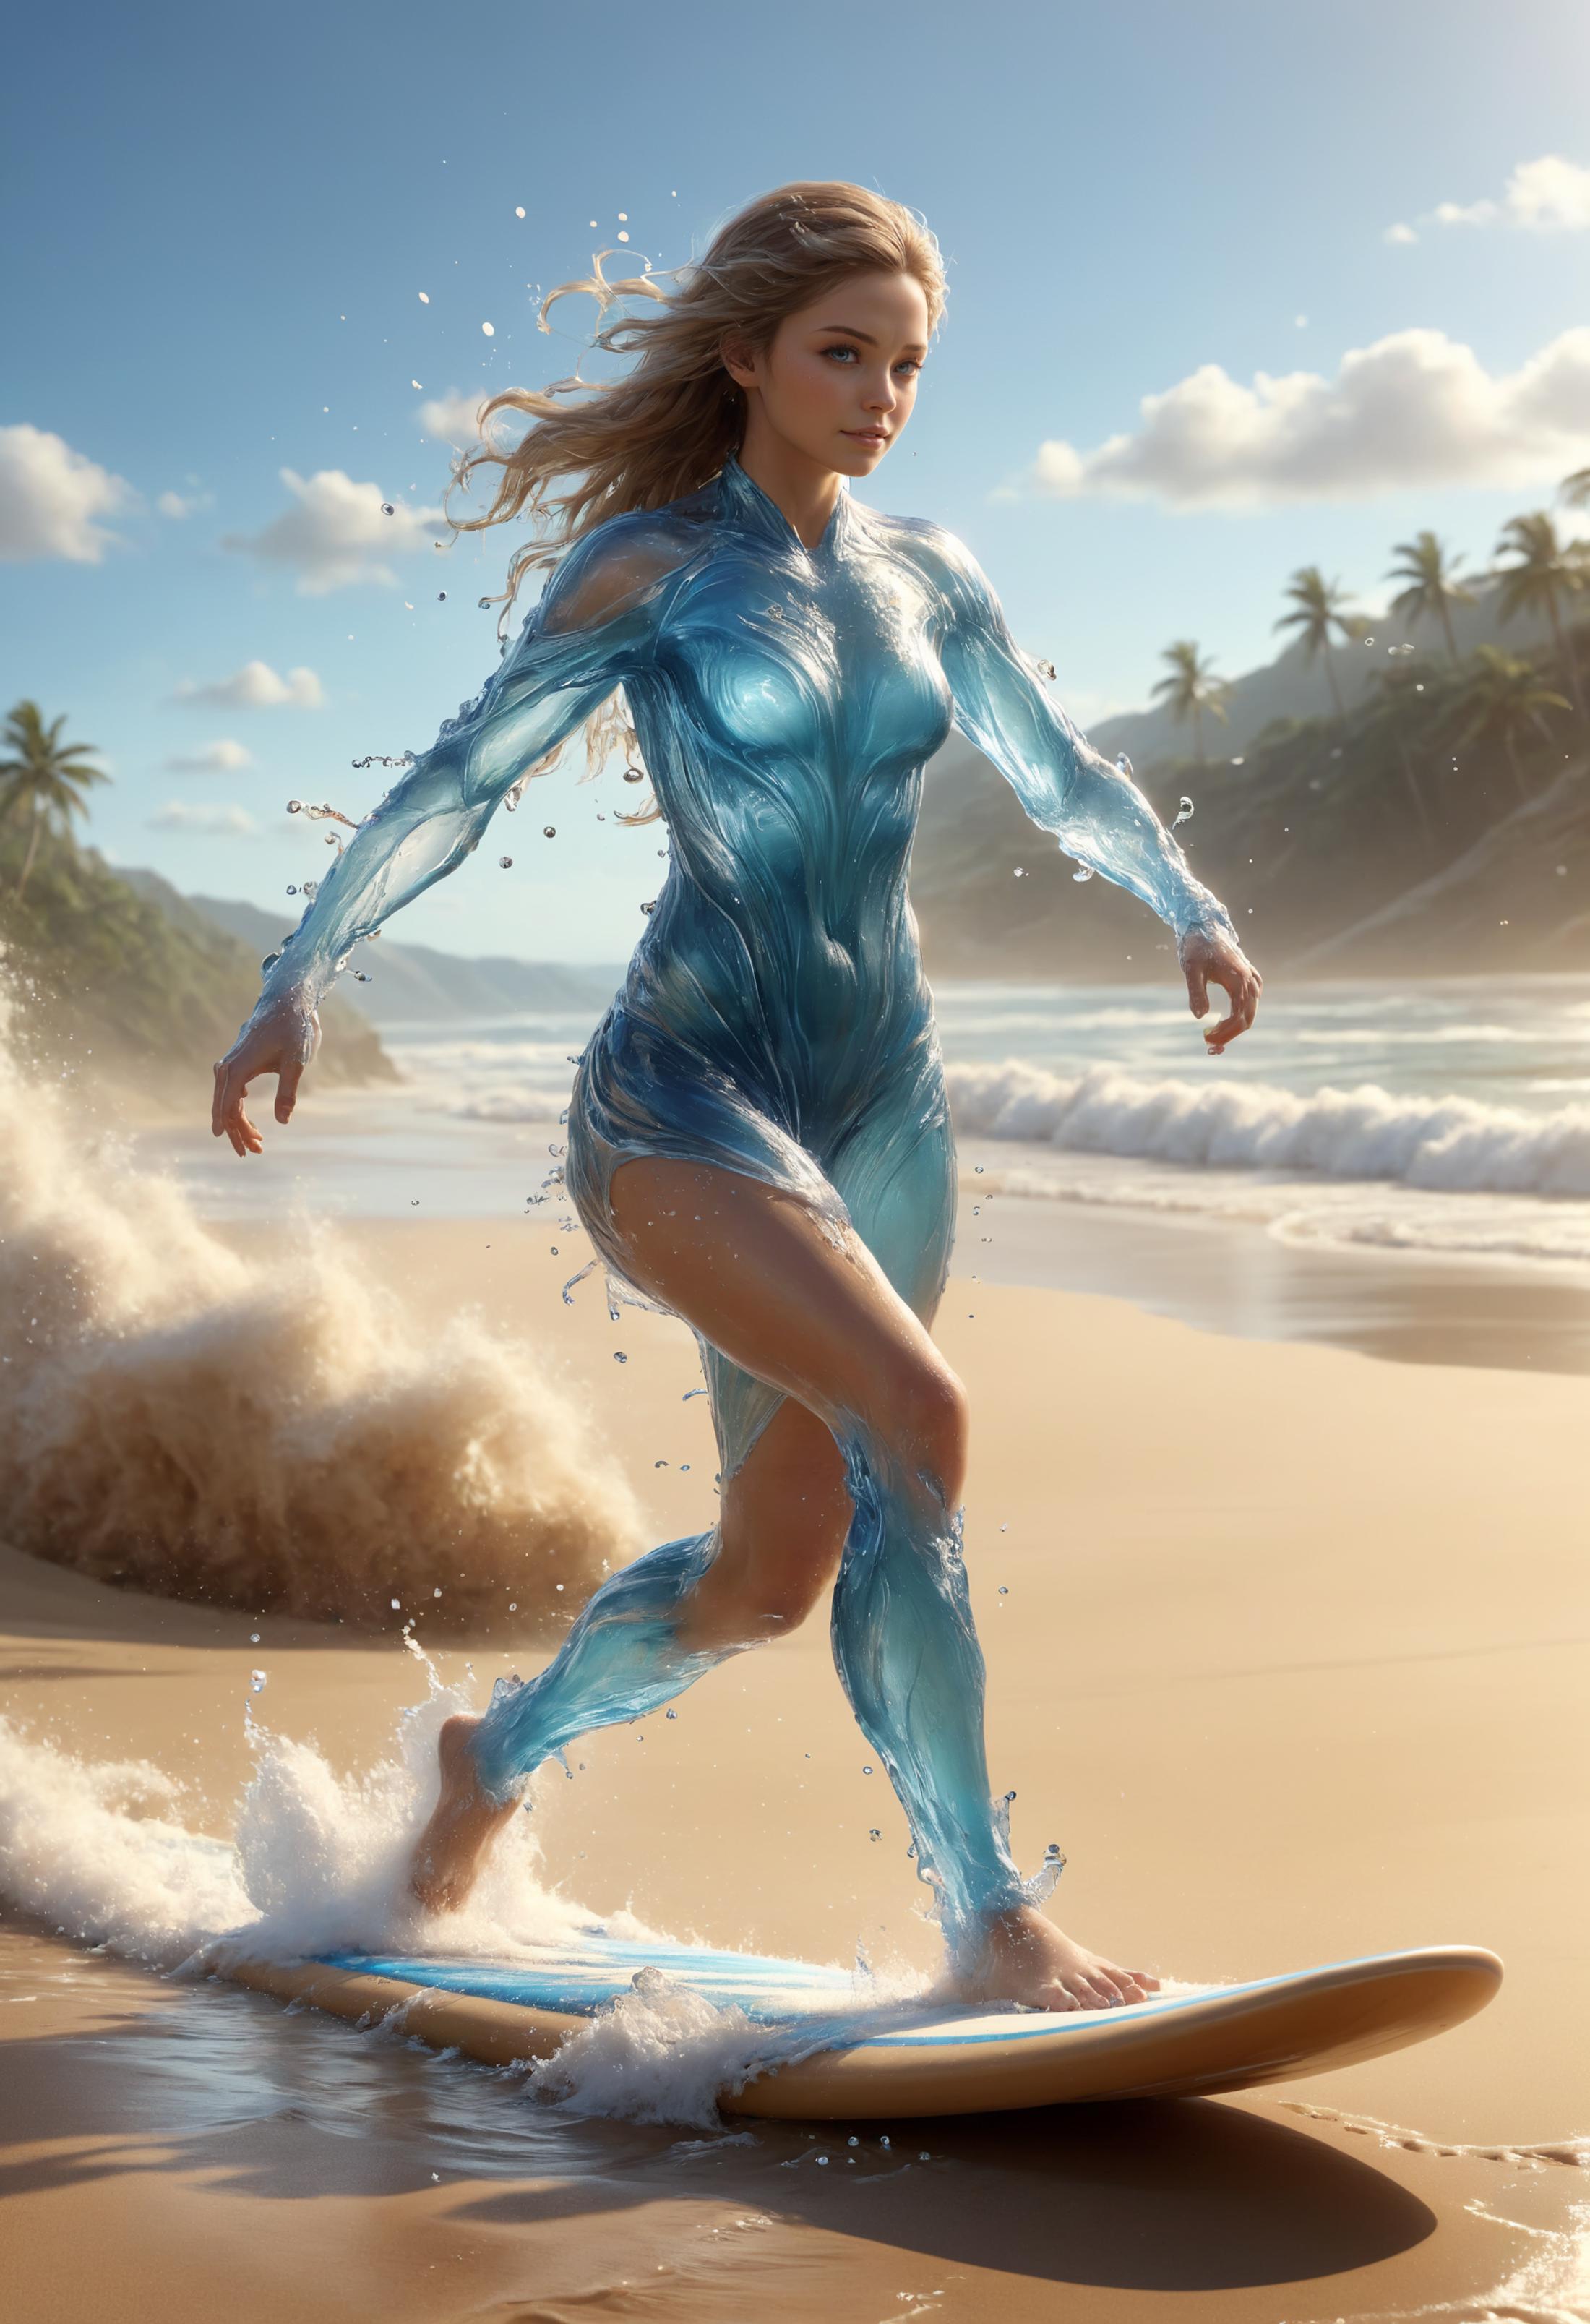 Artistic Rendering of a Female Mermaid Walking on a Sandy Beach with Water Splashing Around Her